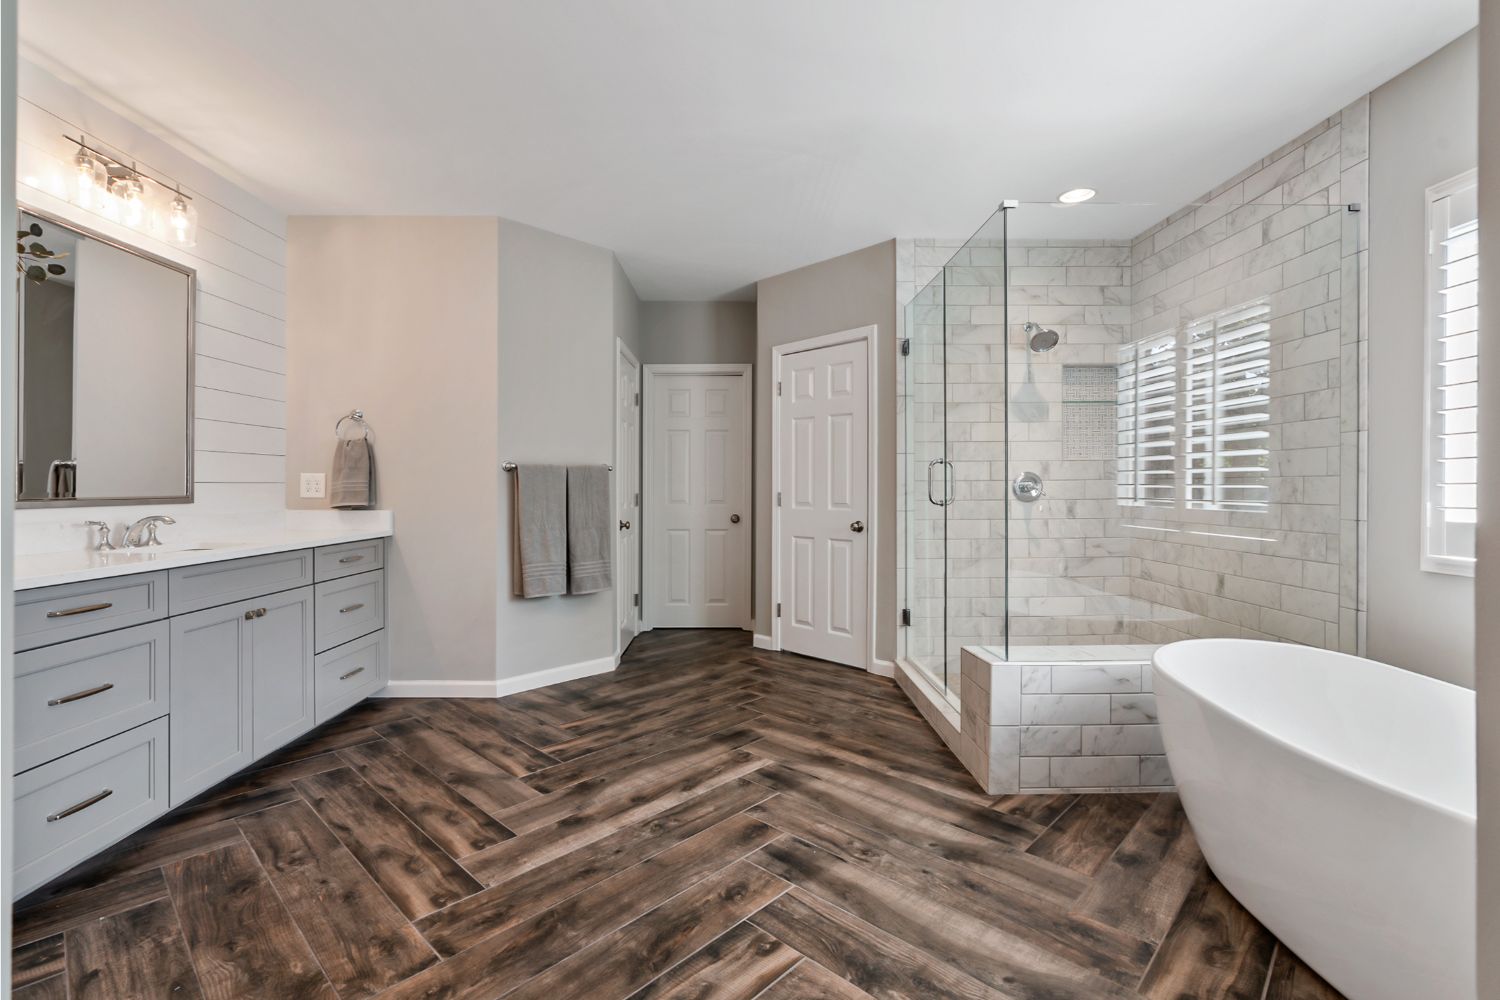 Beautiful master bathroom remodel, with wood look tile, layed in a herringbone pattern.